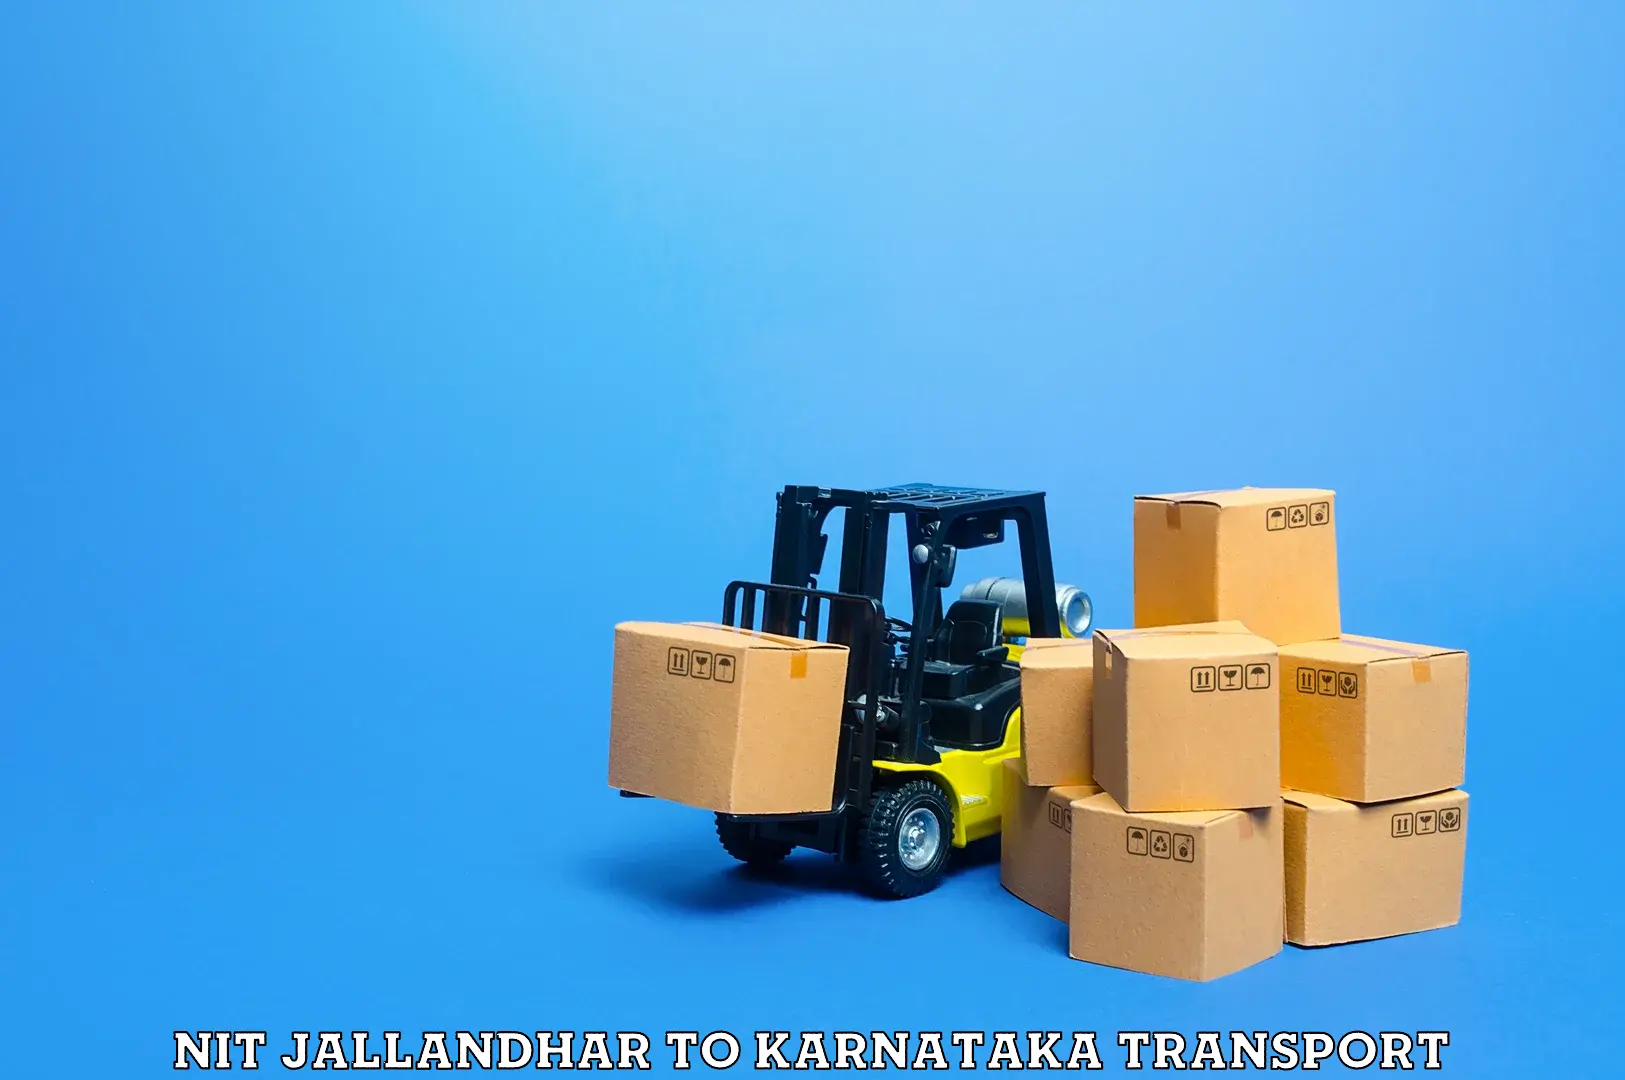 Delivery service NIT Jallandhar to Kollegal